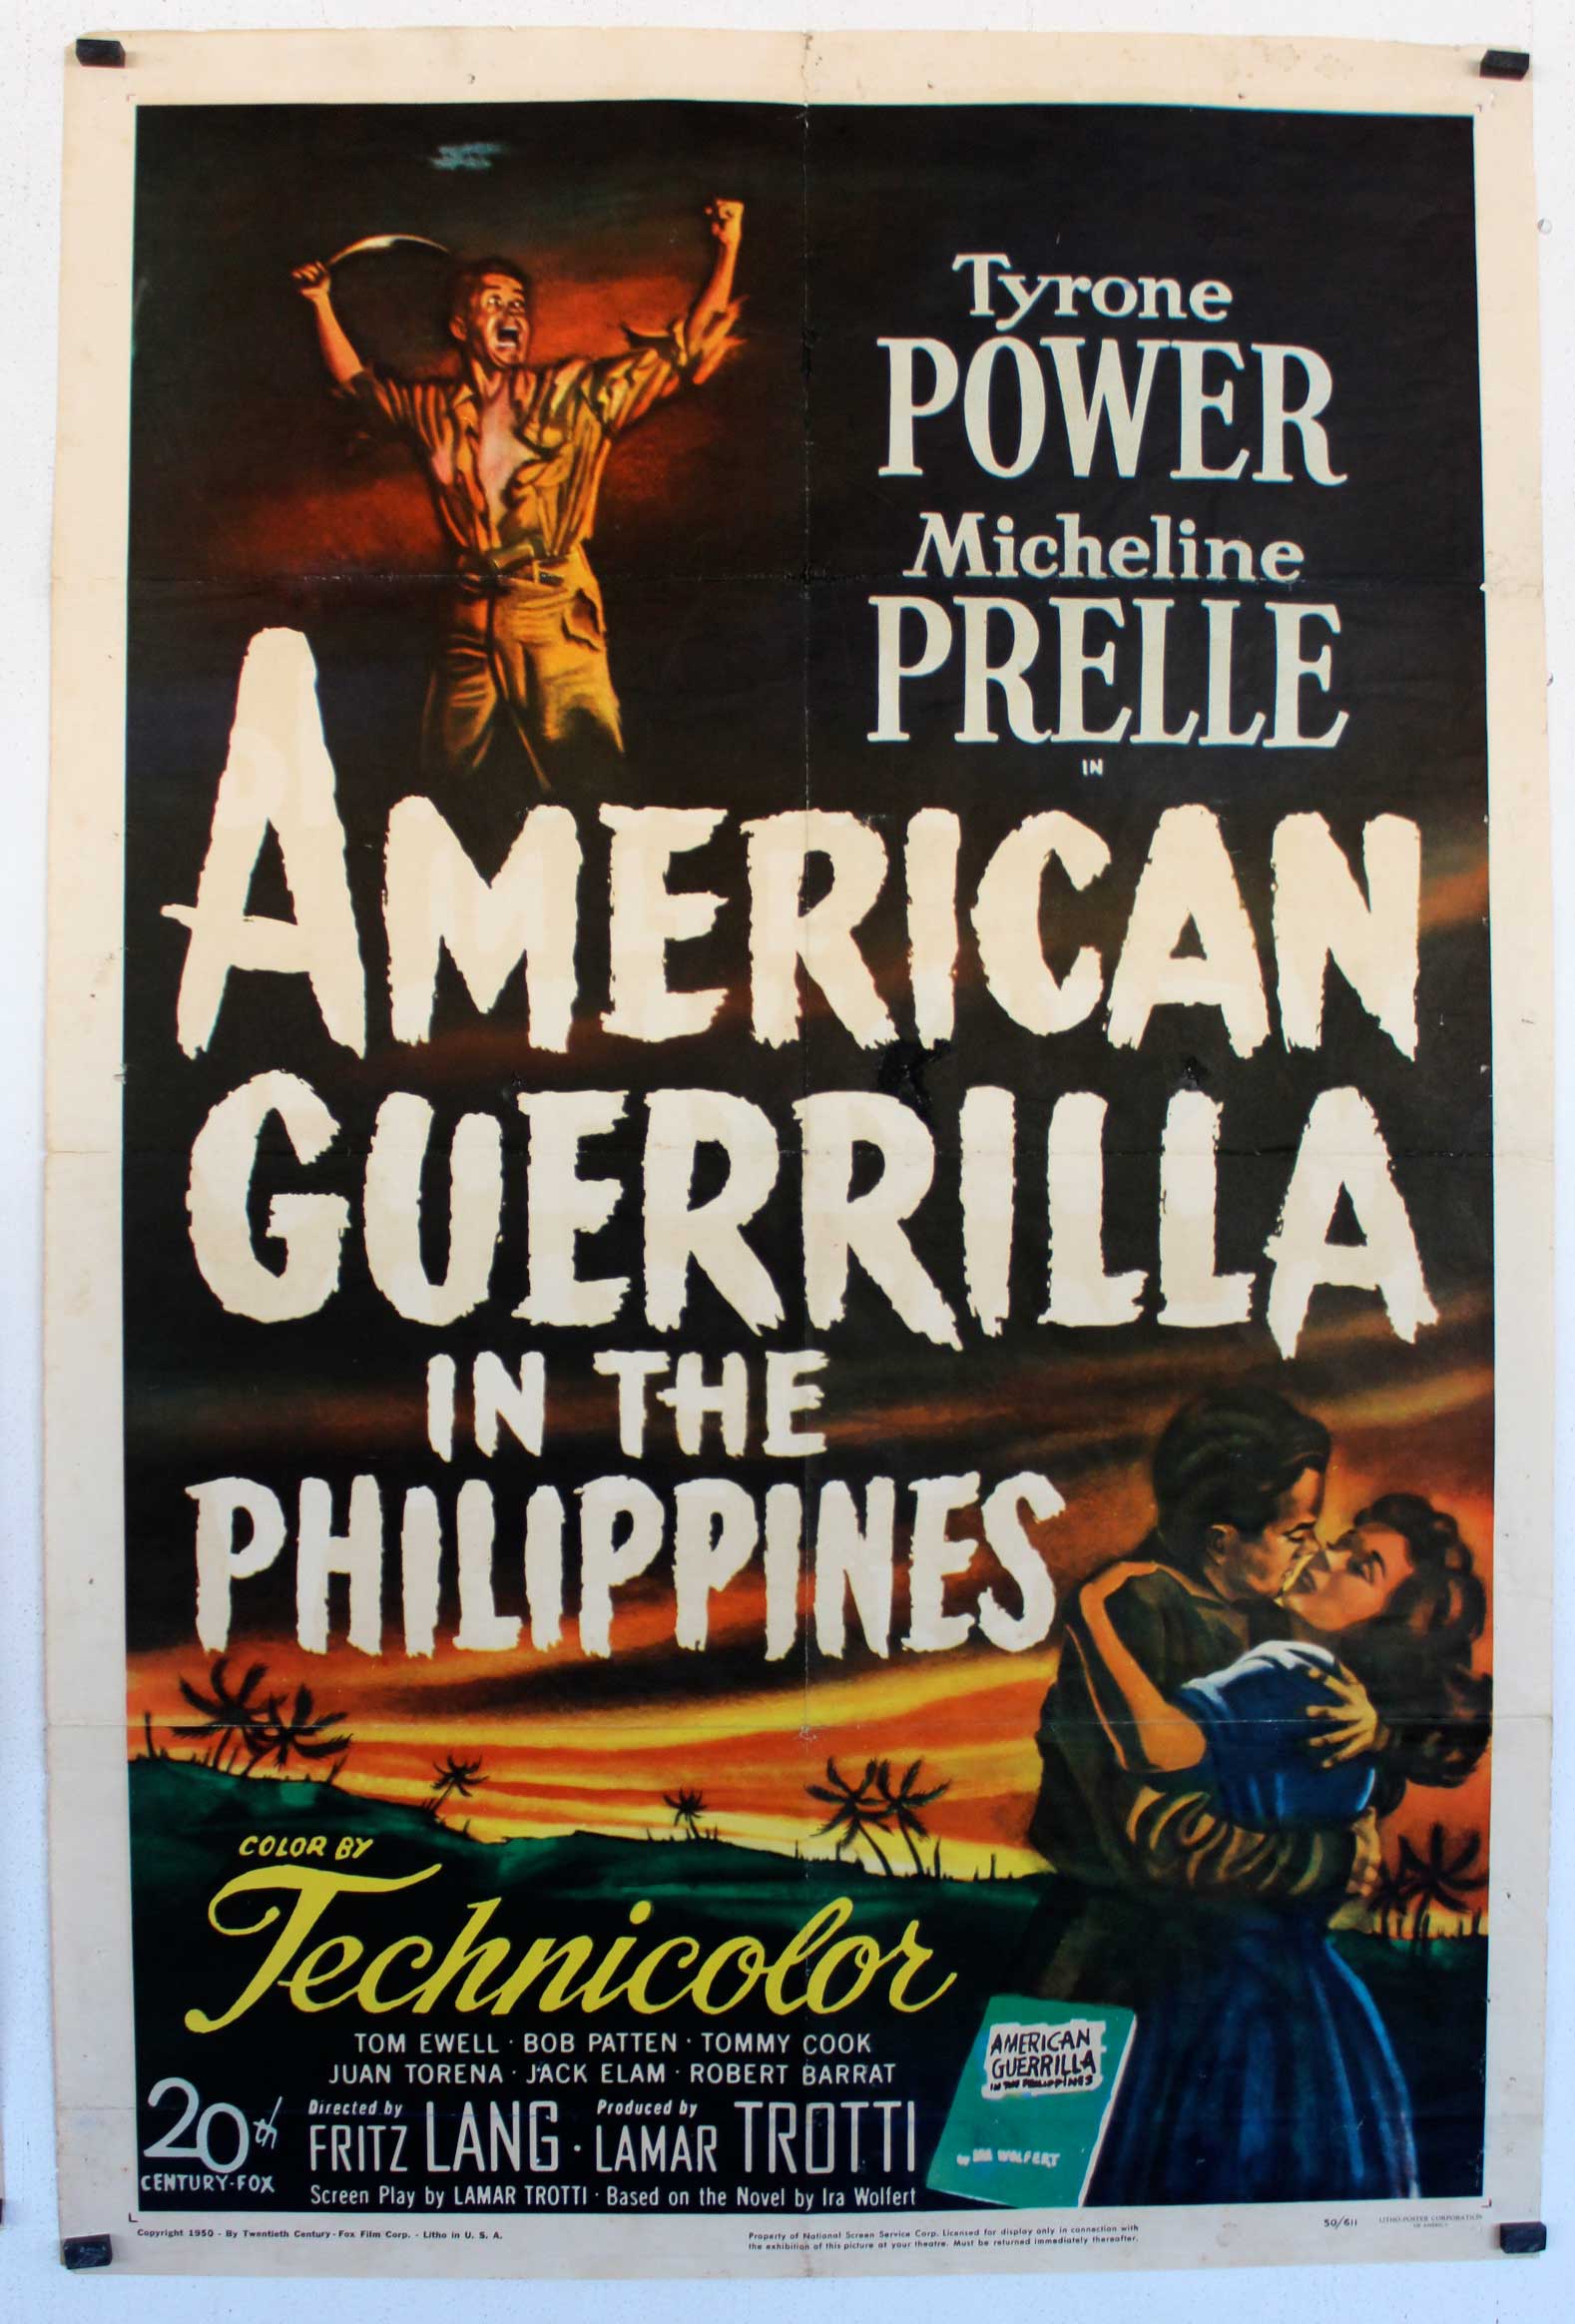 AMERICAN GUERRILLA IN THE PHILIPPINES